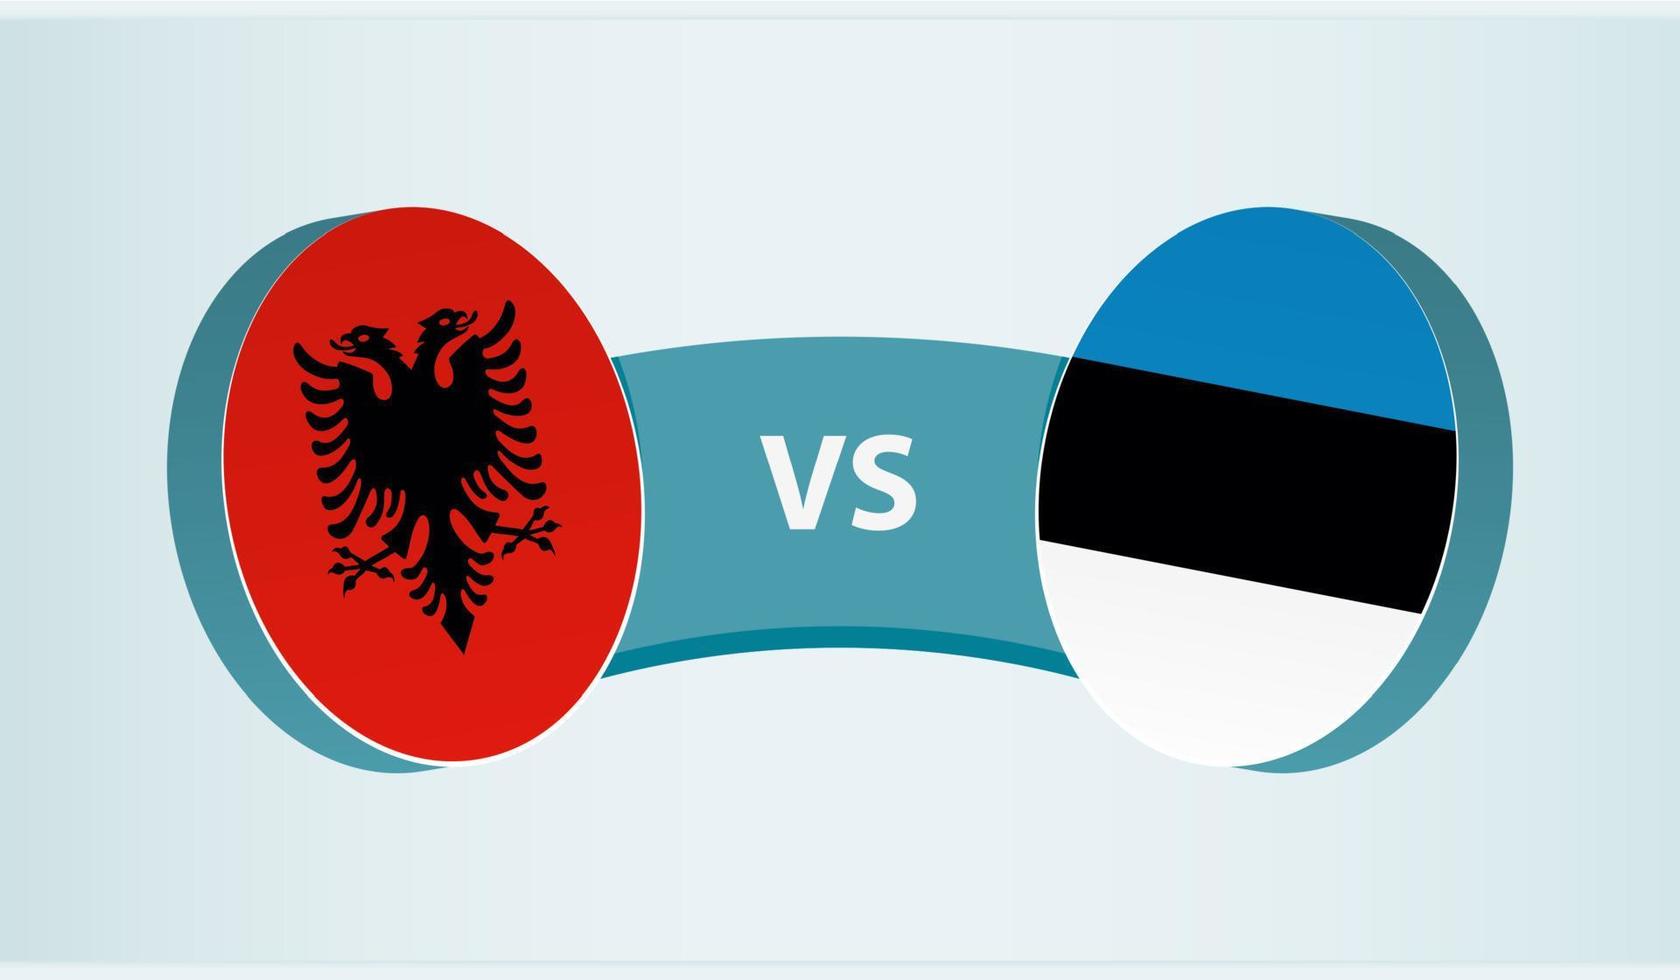 Albania versus Estonia, team sports competition concept. vector